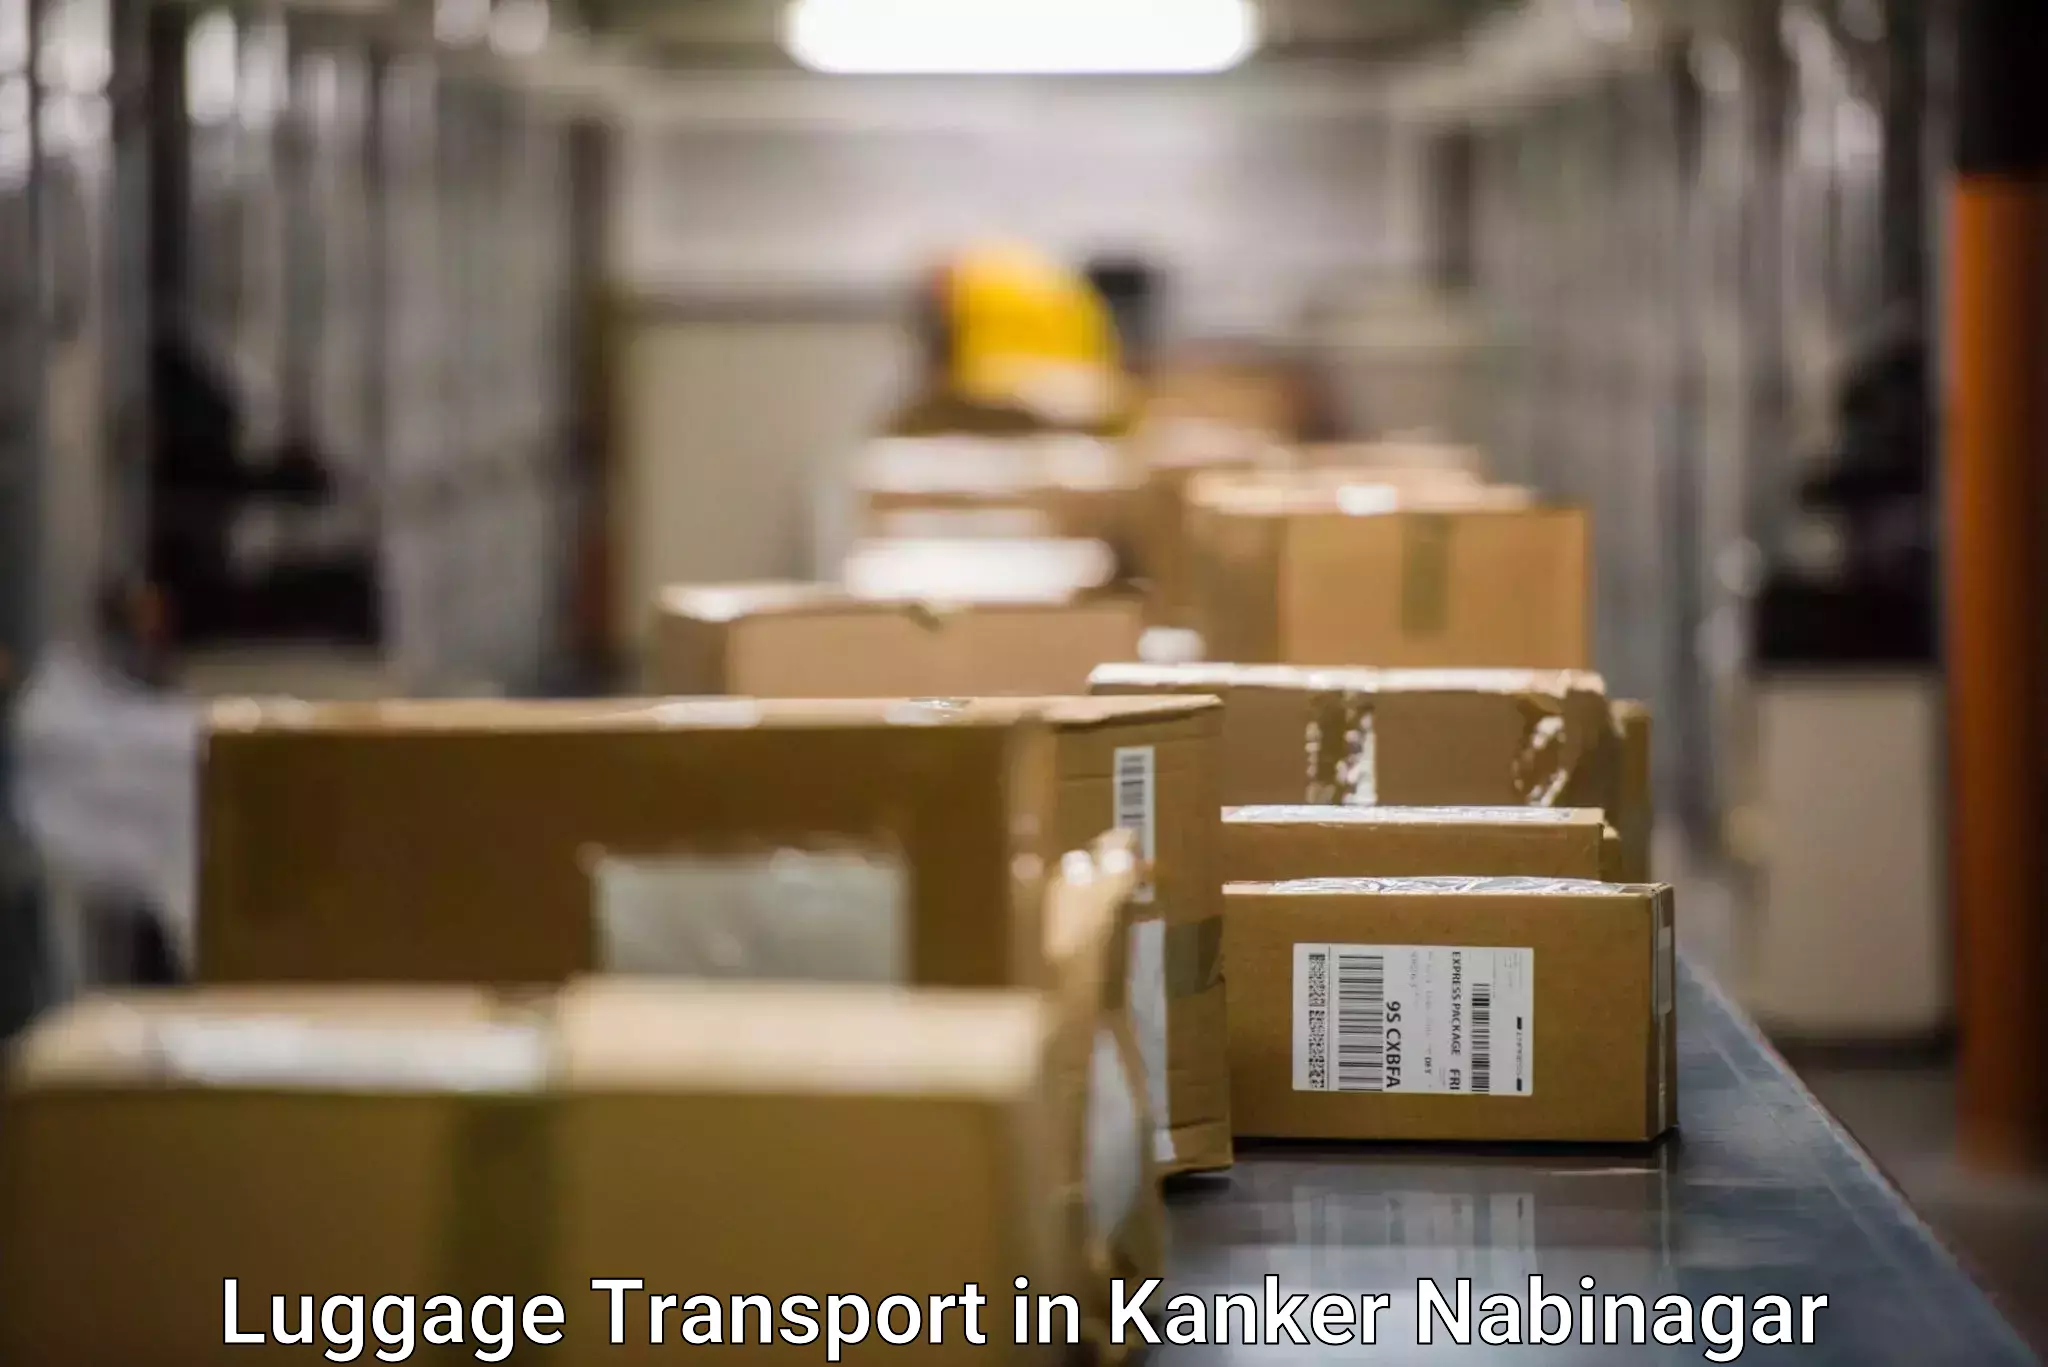 Weekend baggage shipping in Kanker Nabinagar